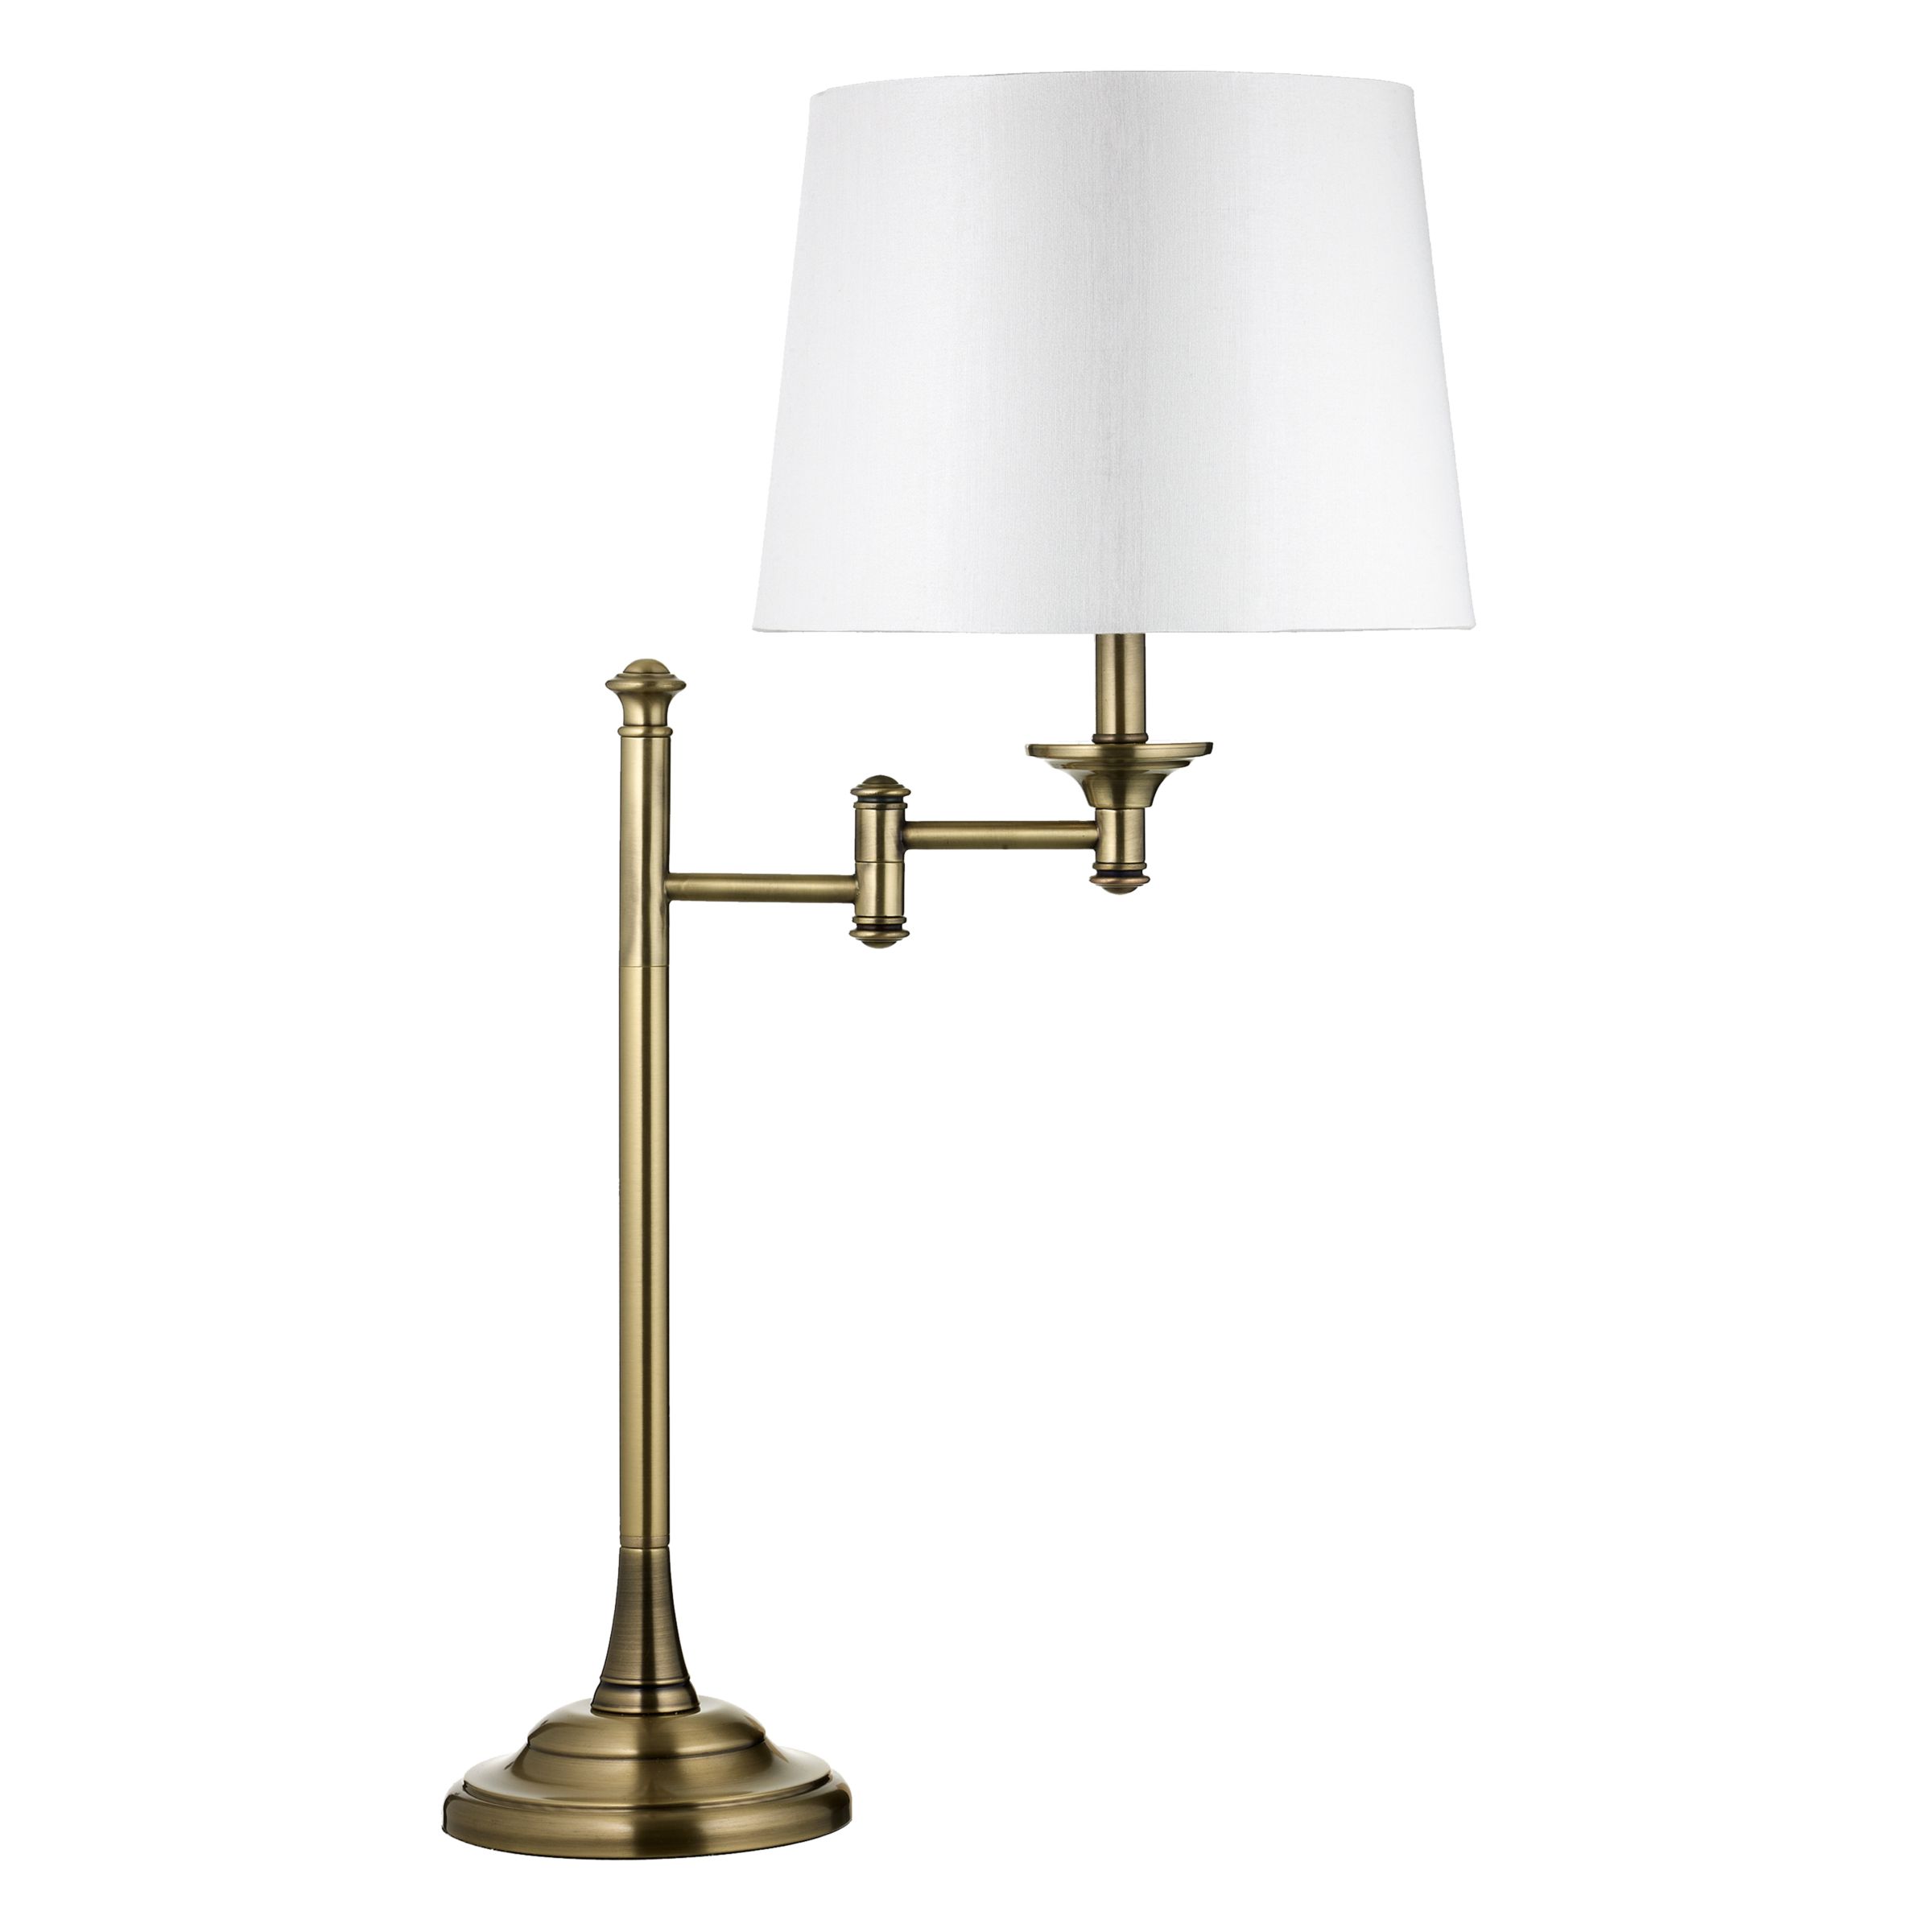 John Lewis Dominic Table Lamp, Brass 153662